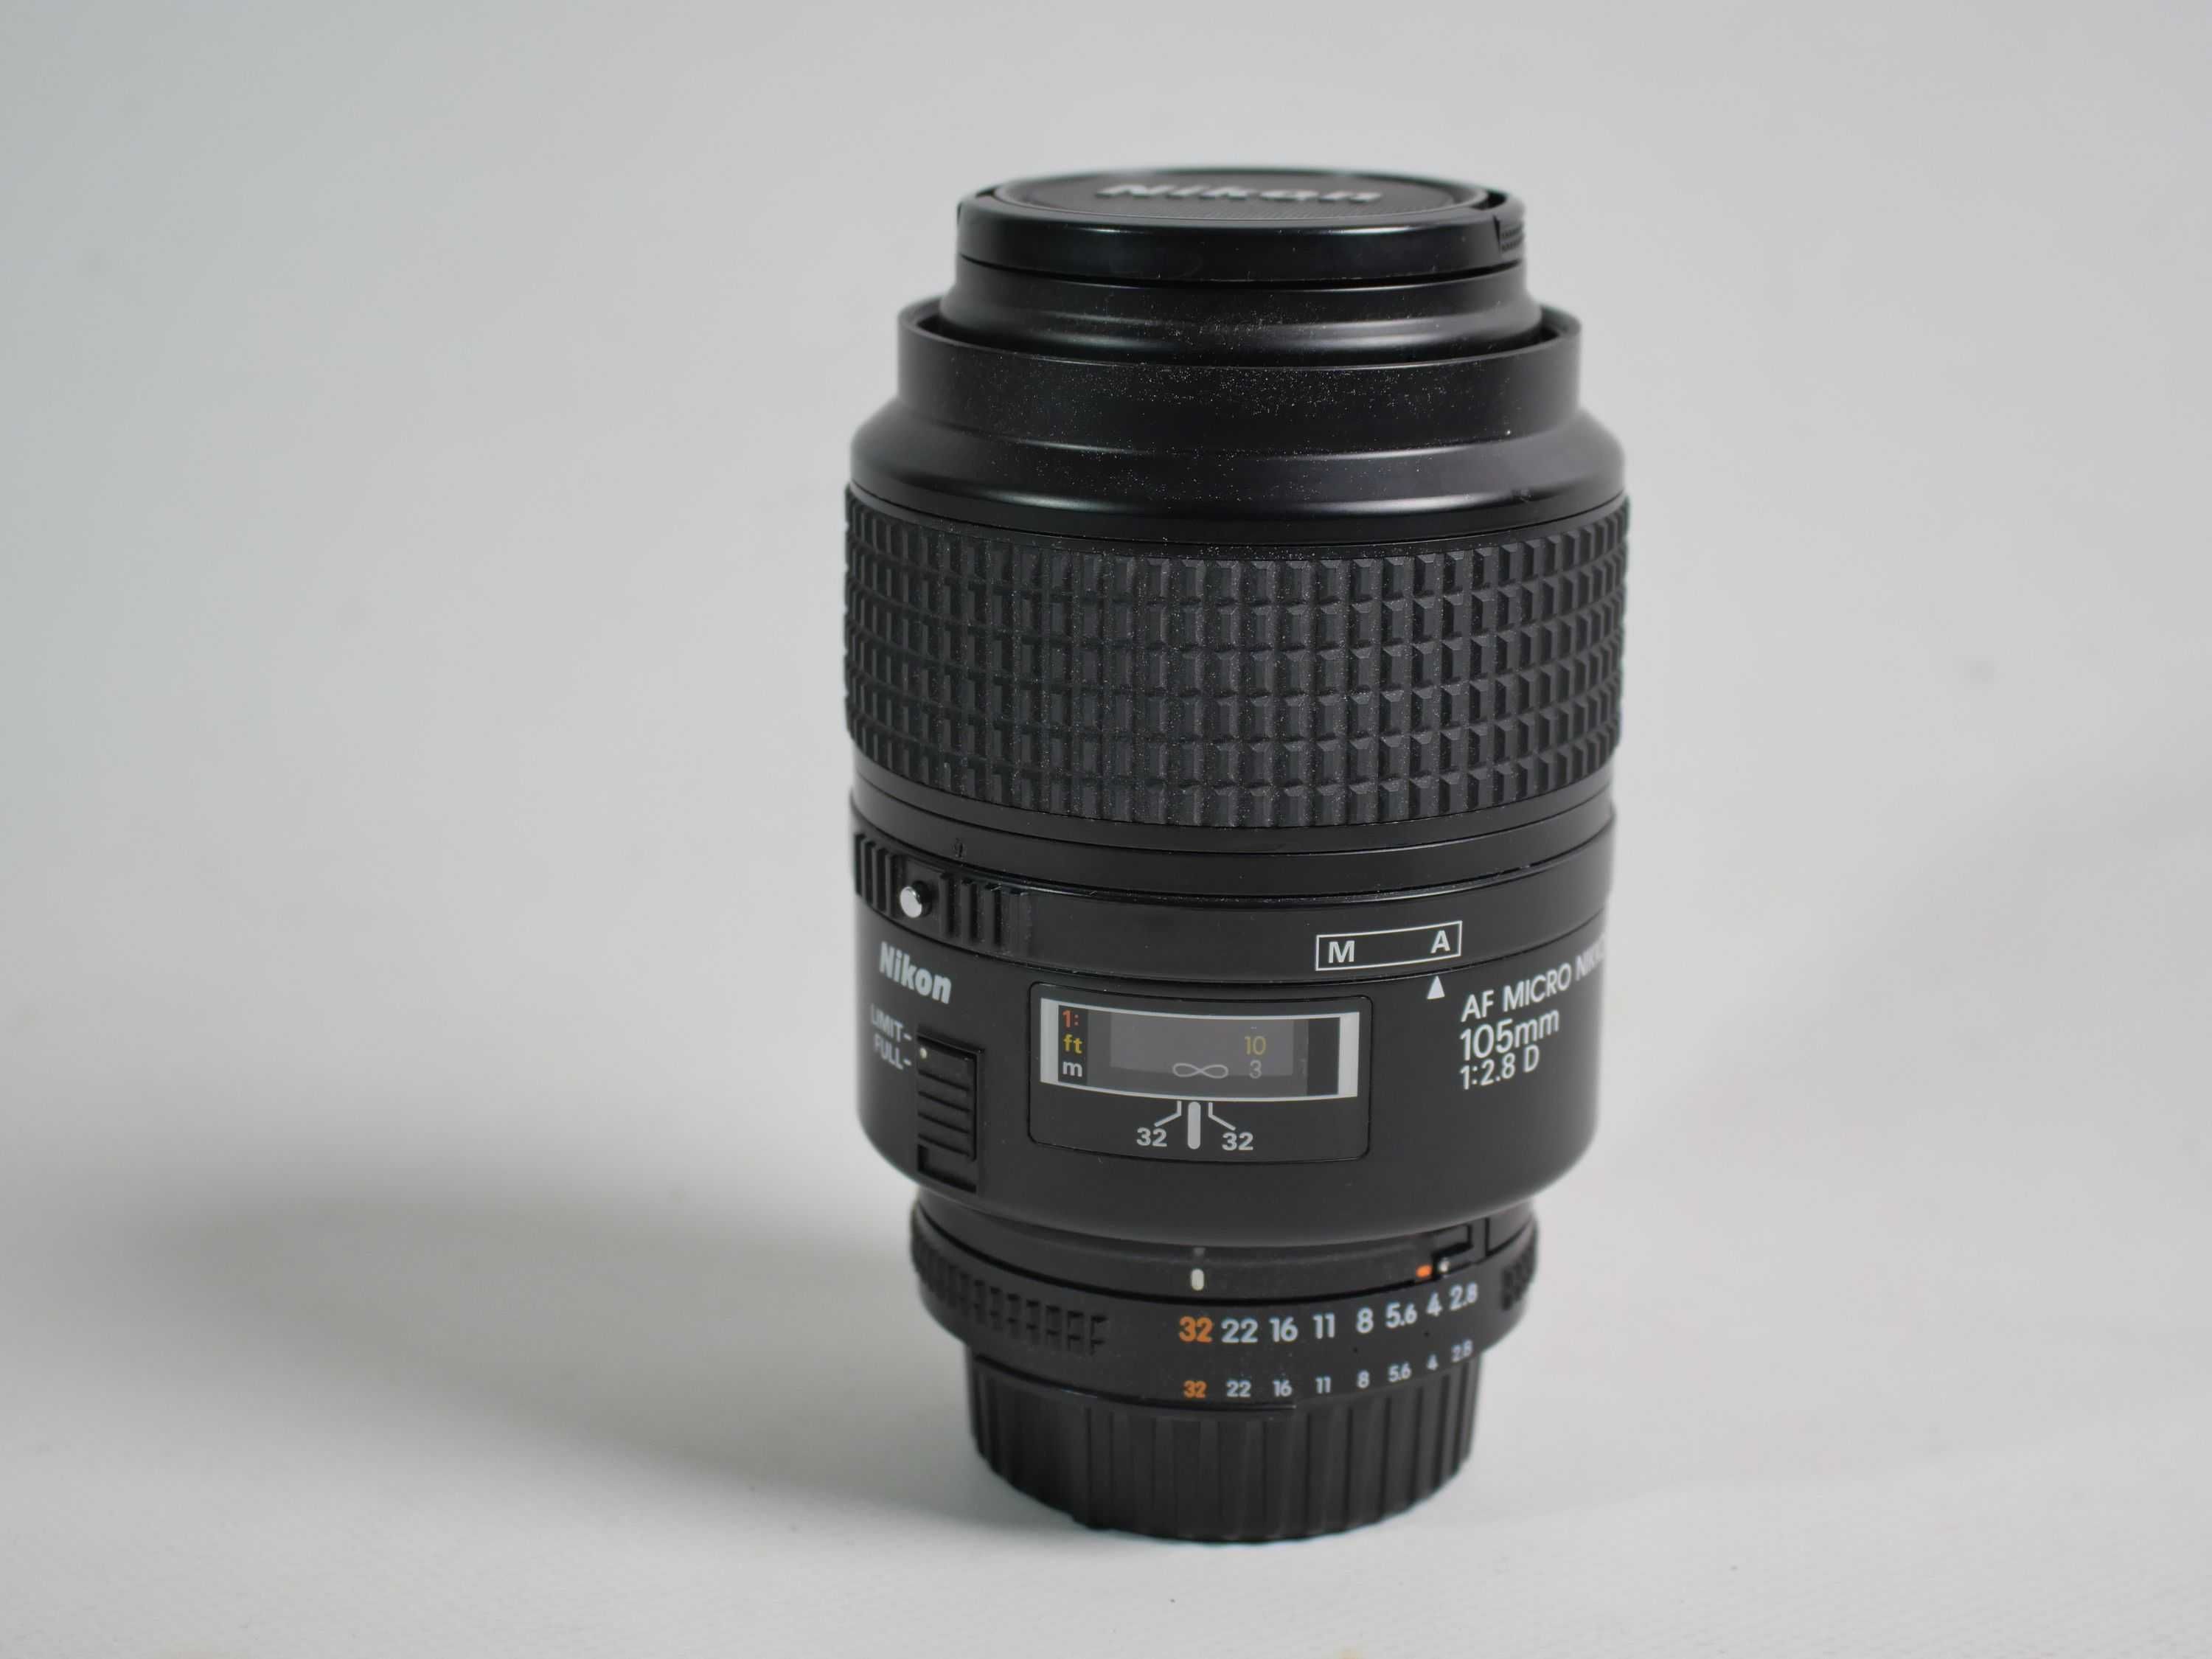 Об'єктив Nikon 105mm f/2.8D AF Micro-Nikkor макро